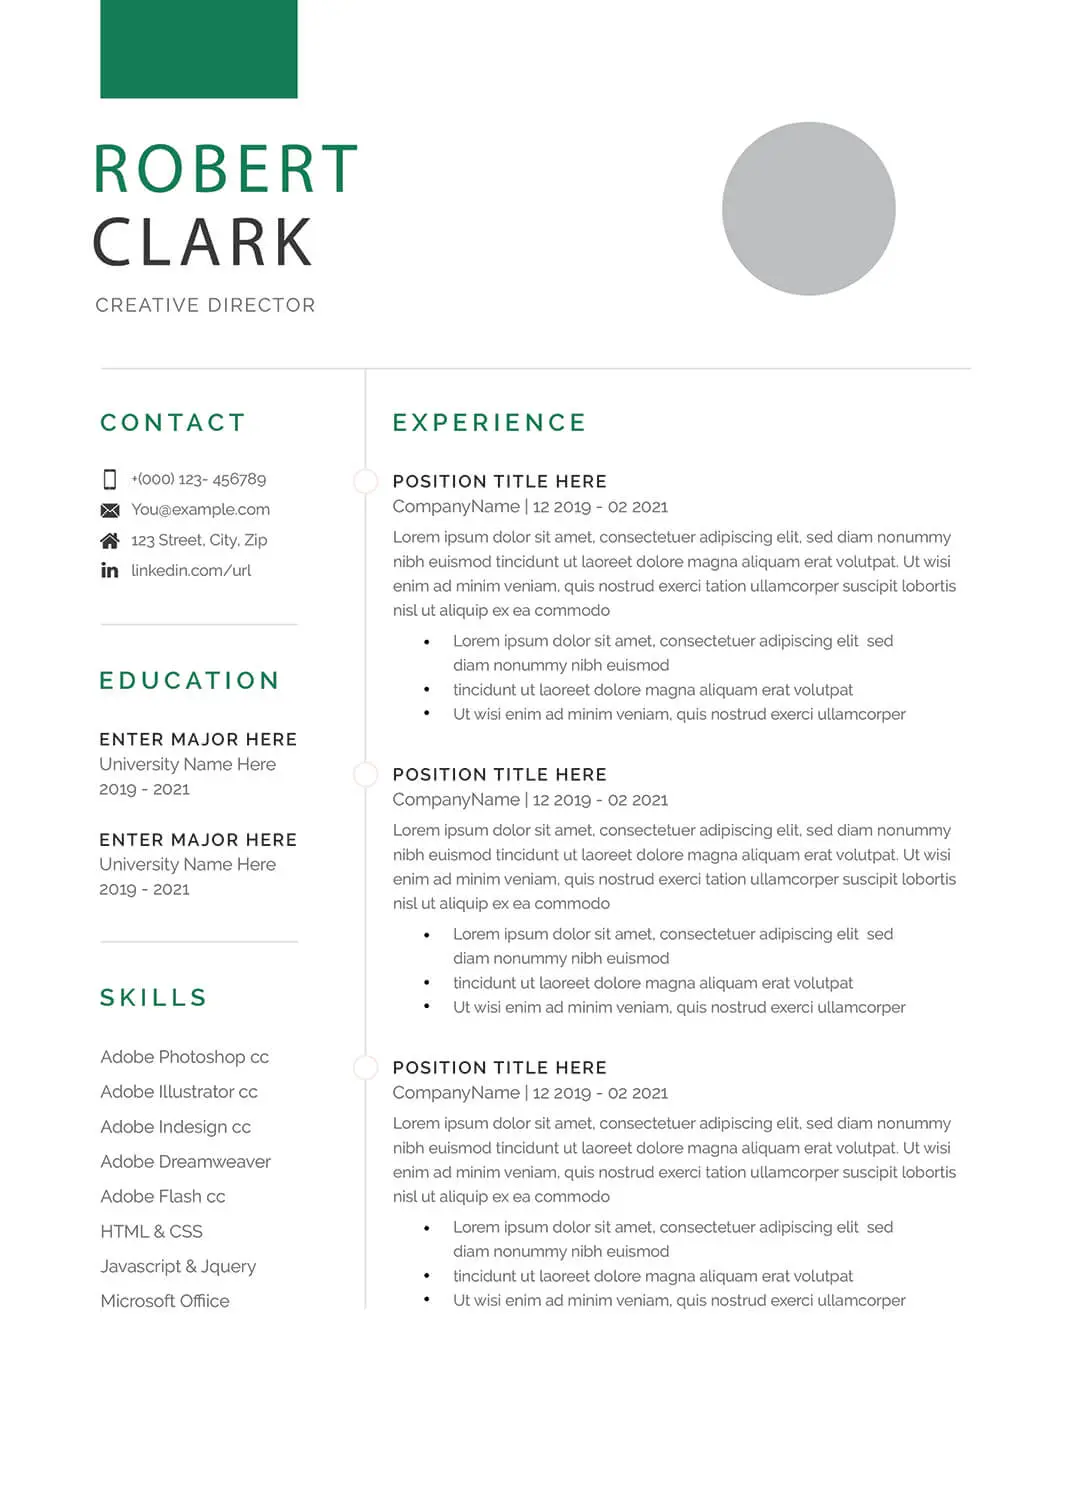 investment-banker-resume